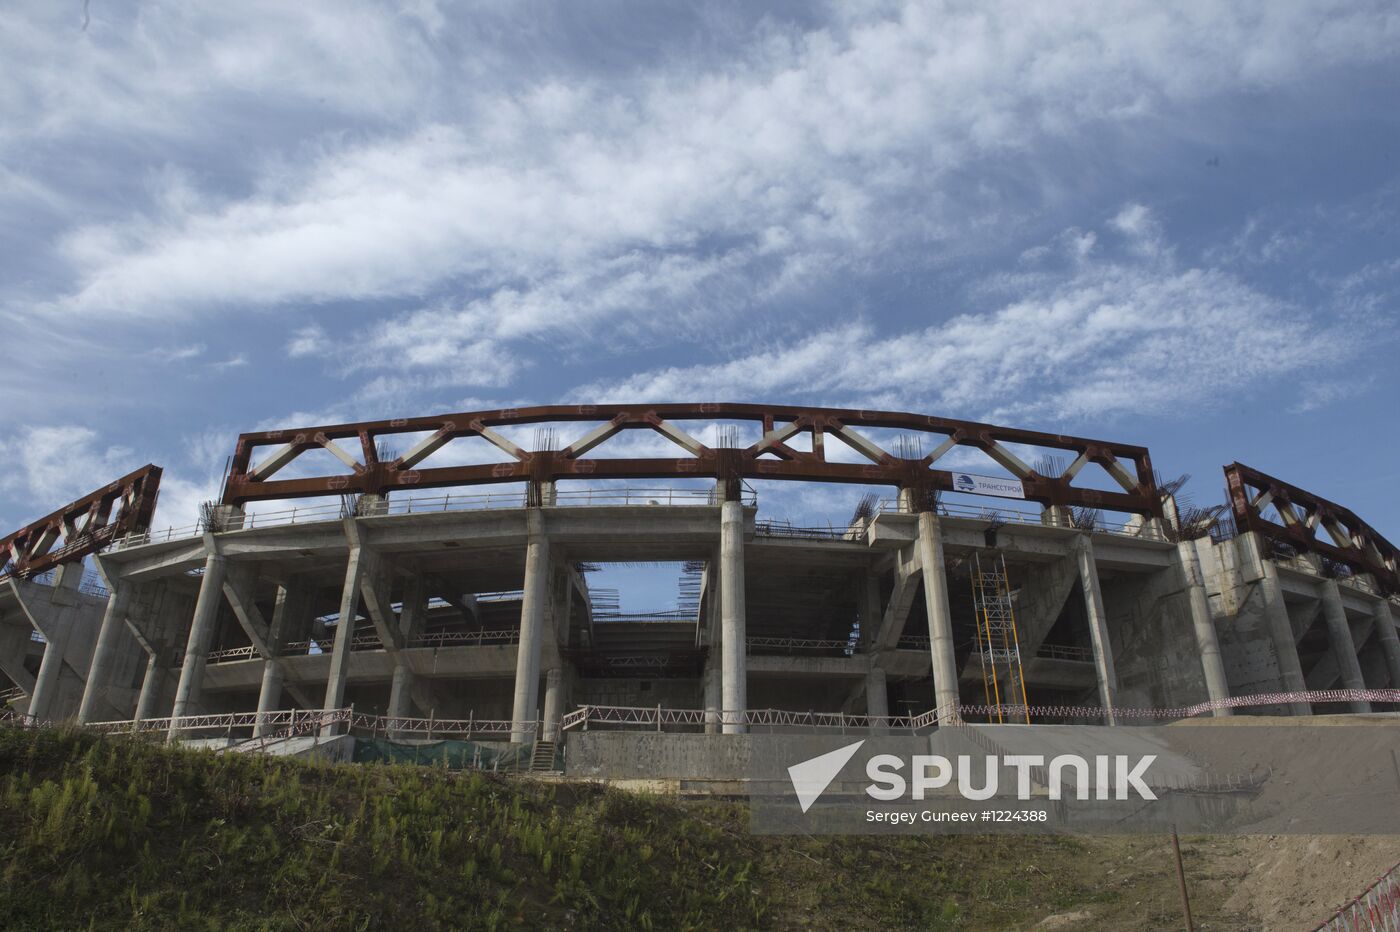 Zenit Arena under construction in St. Petersburg